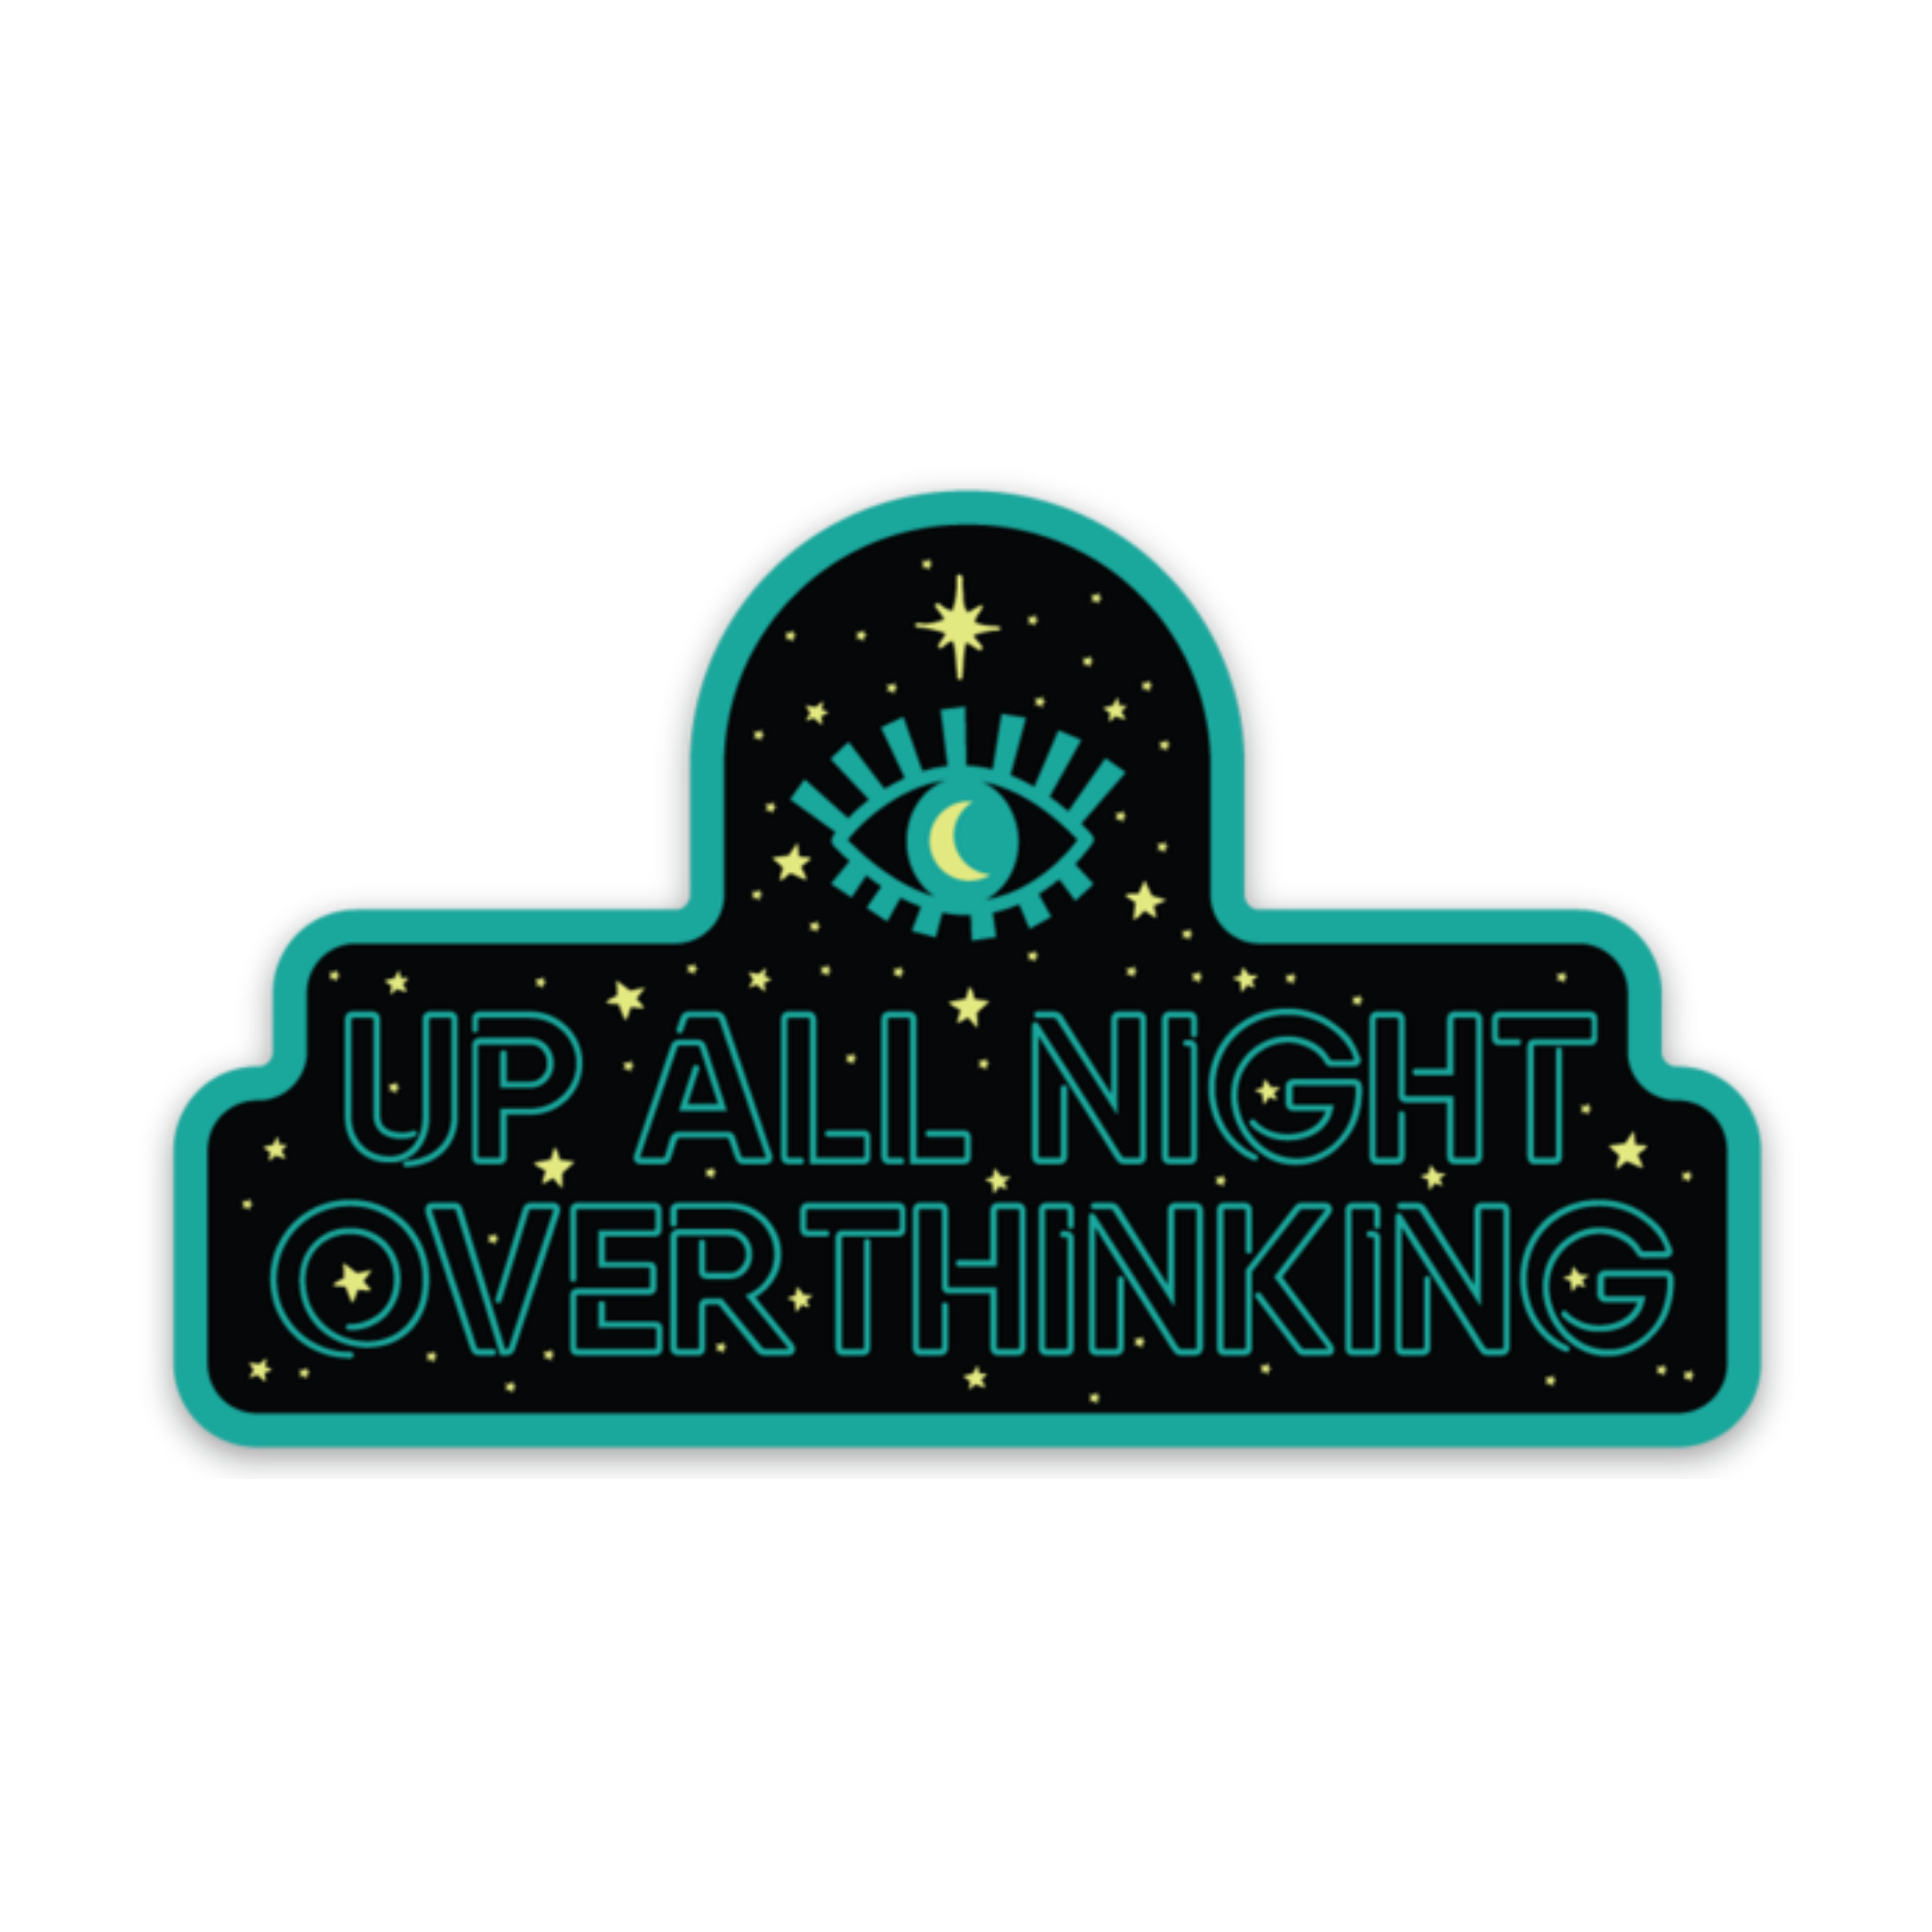 Up All Night Overthinking Sticker (funny)